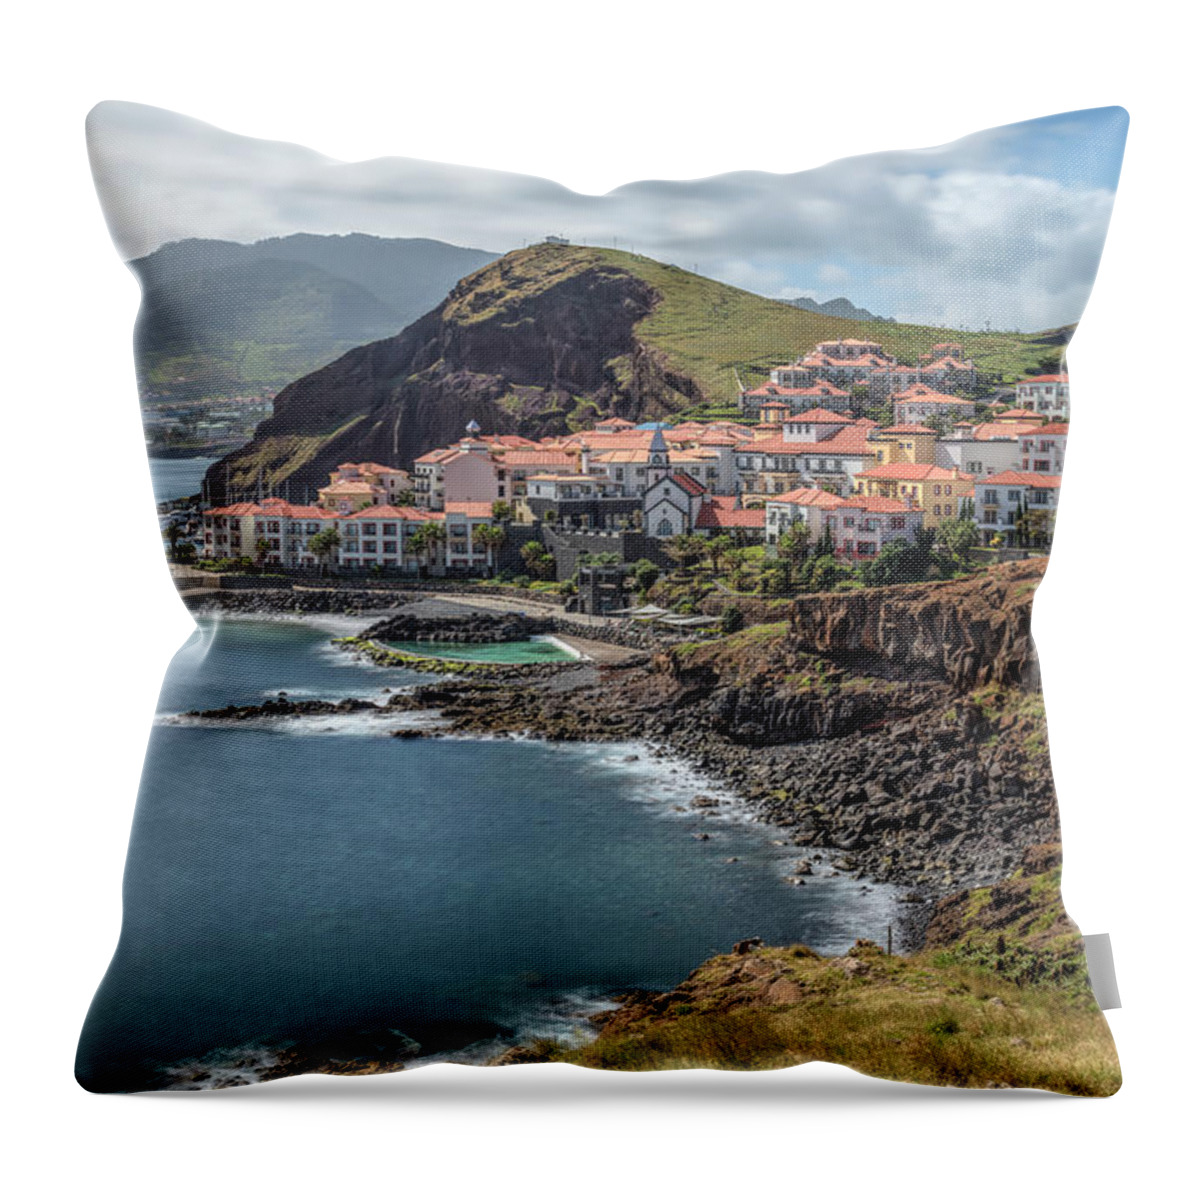 Ponta De Sao Lourencao Throw Pillow featuring the photograph Ponta de Sao Lourencao - Madeira #3 by Joana Kruse